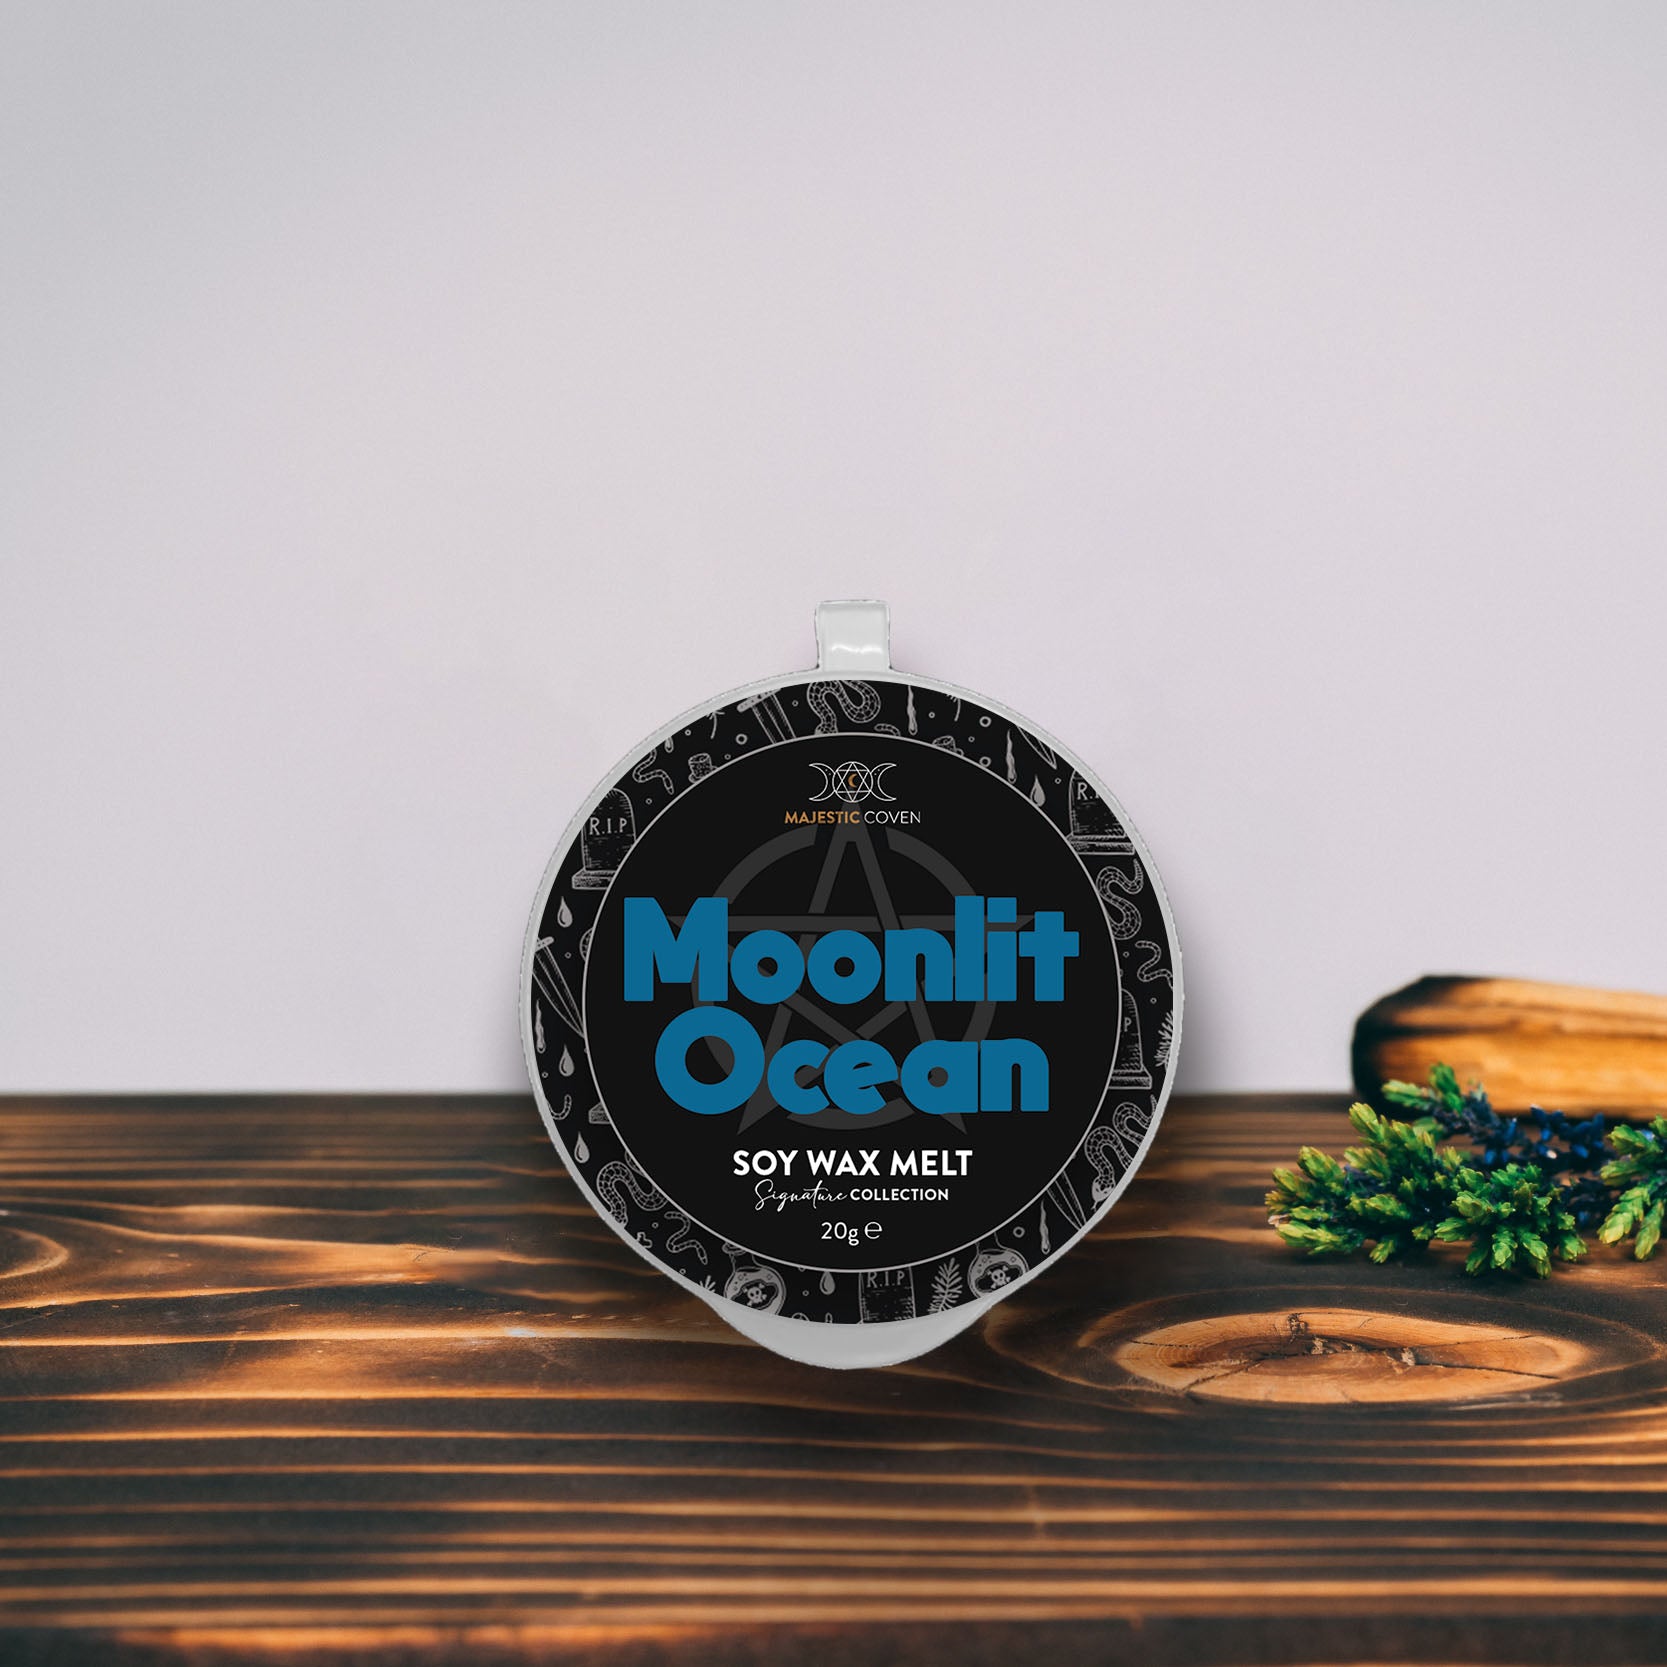 Moonlit Ocean - Soy Wax Melt 20g Sample Pot Majestic Coven